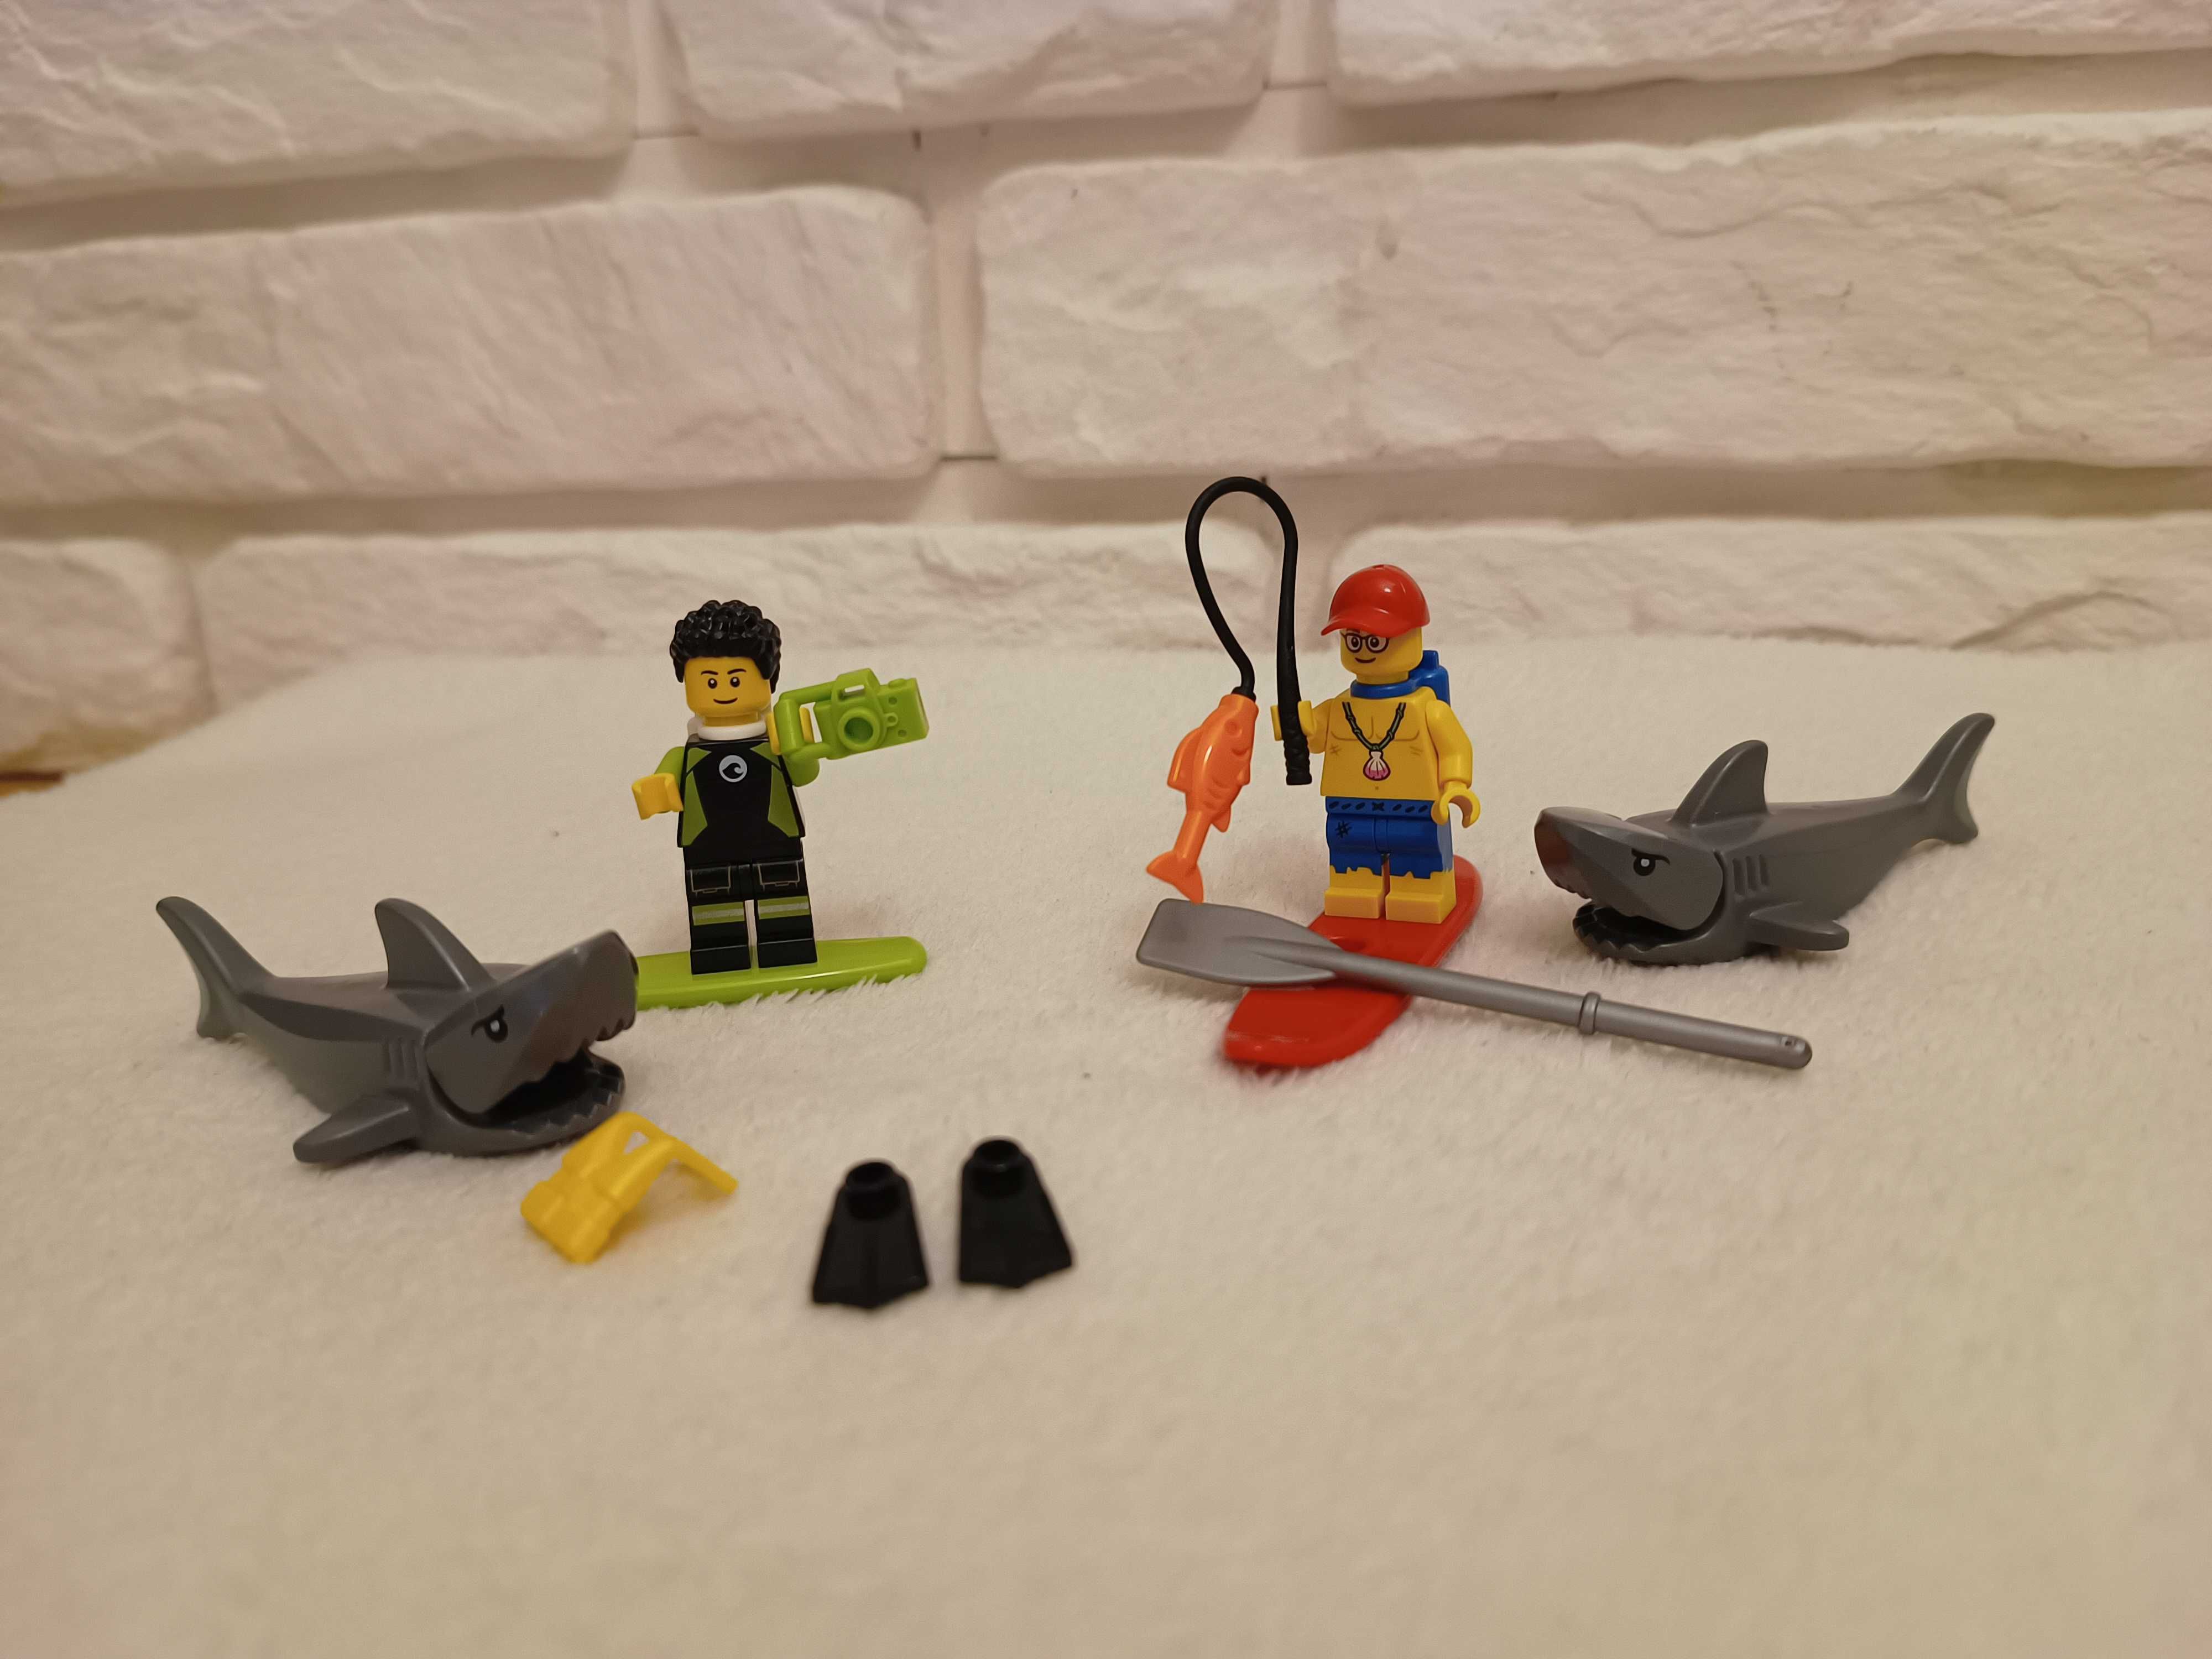 Lego ludziki + dodatki - wodne